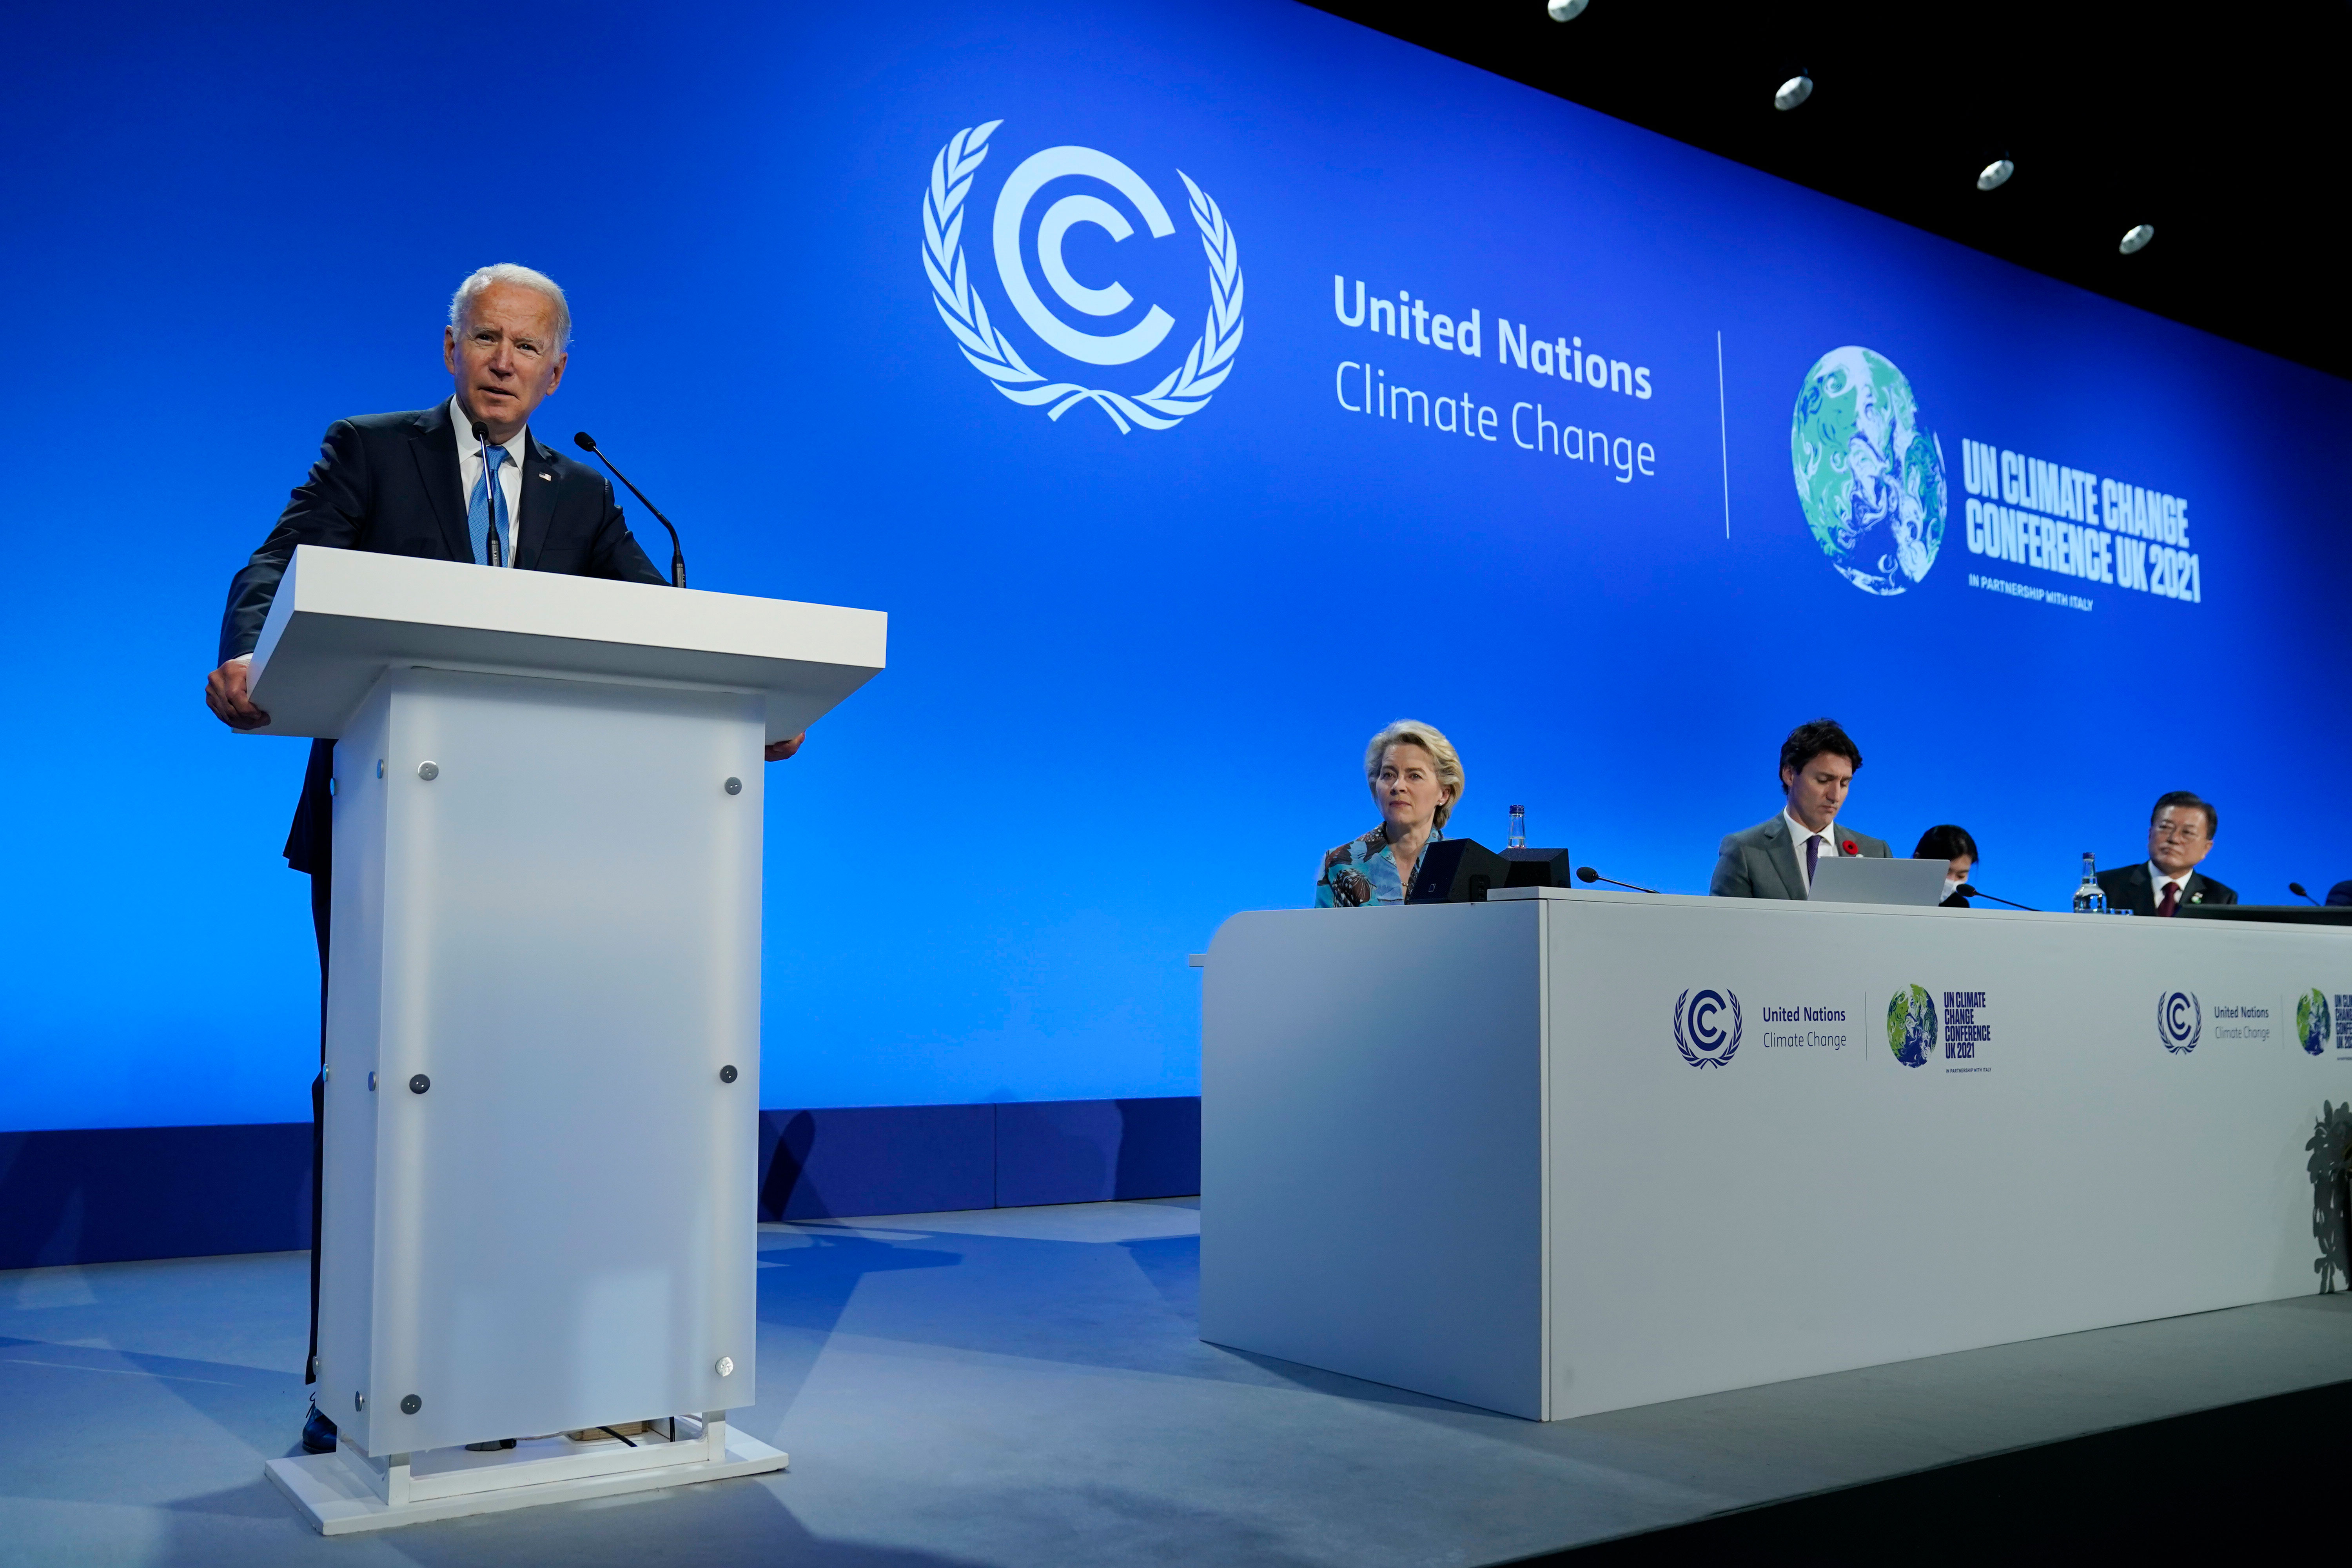 US President Joe Biden speaks during an event at COP26 in Glasgow, Scotland, on November 2.